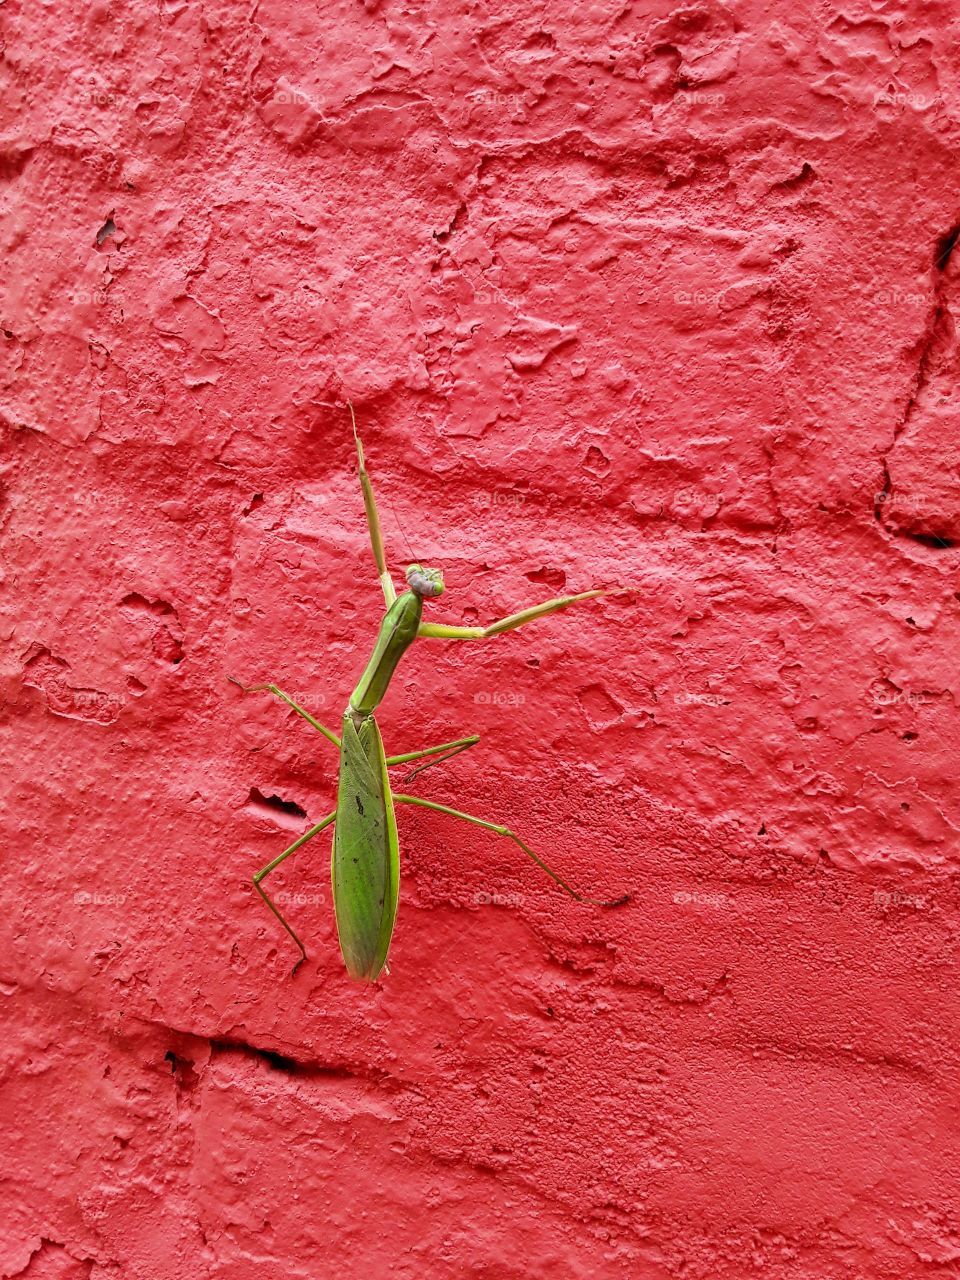 Mantis climbing a wall